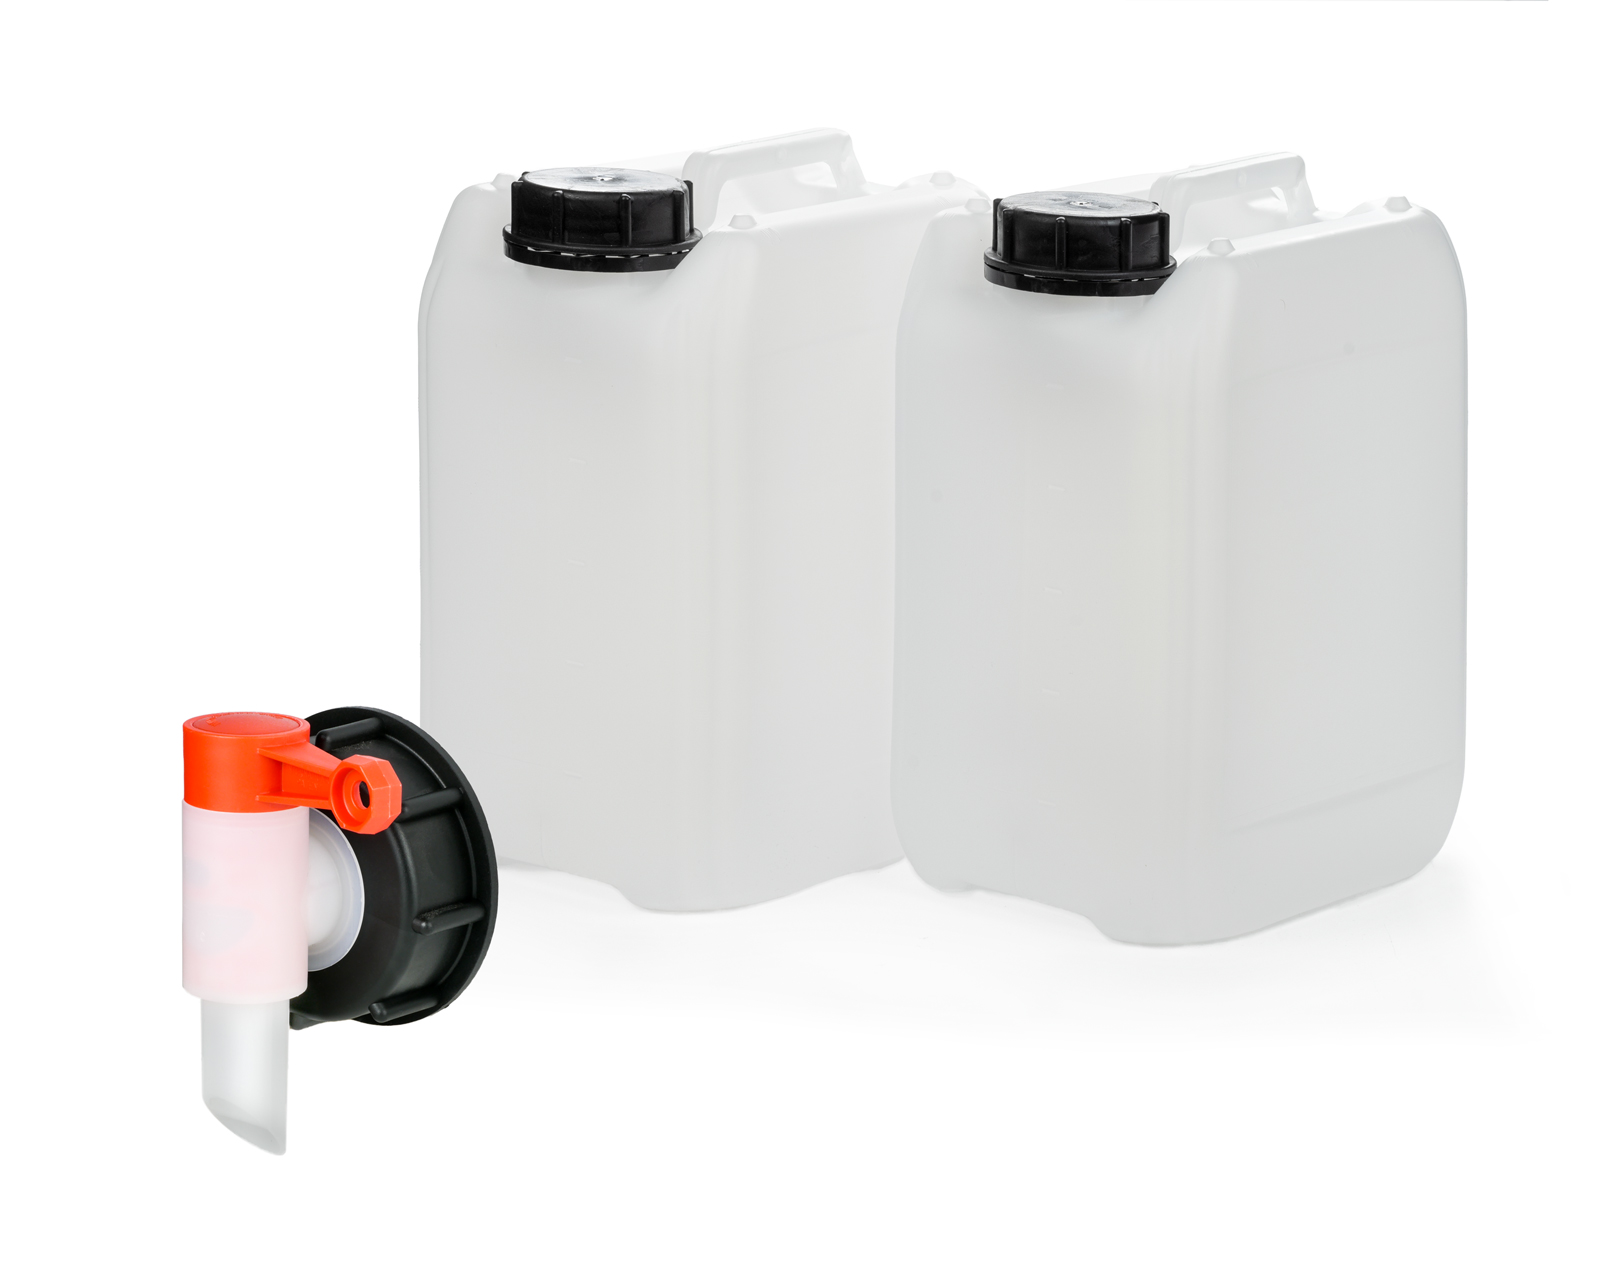 Leer-Kanister / -Flasche für 1, 5, 10 oder 25 Liter Füllmenge inkl. Deckel